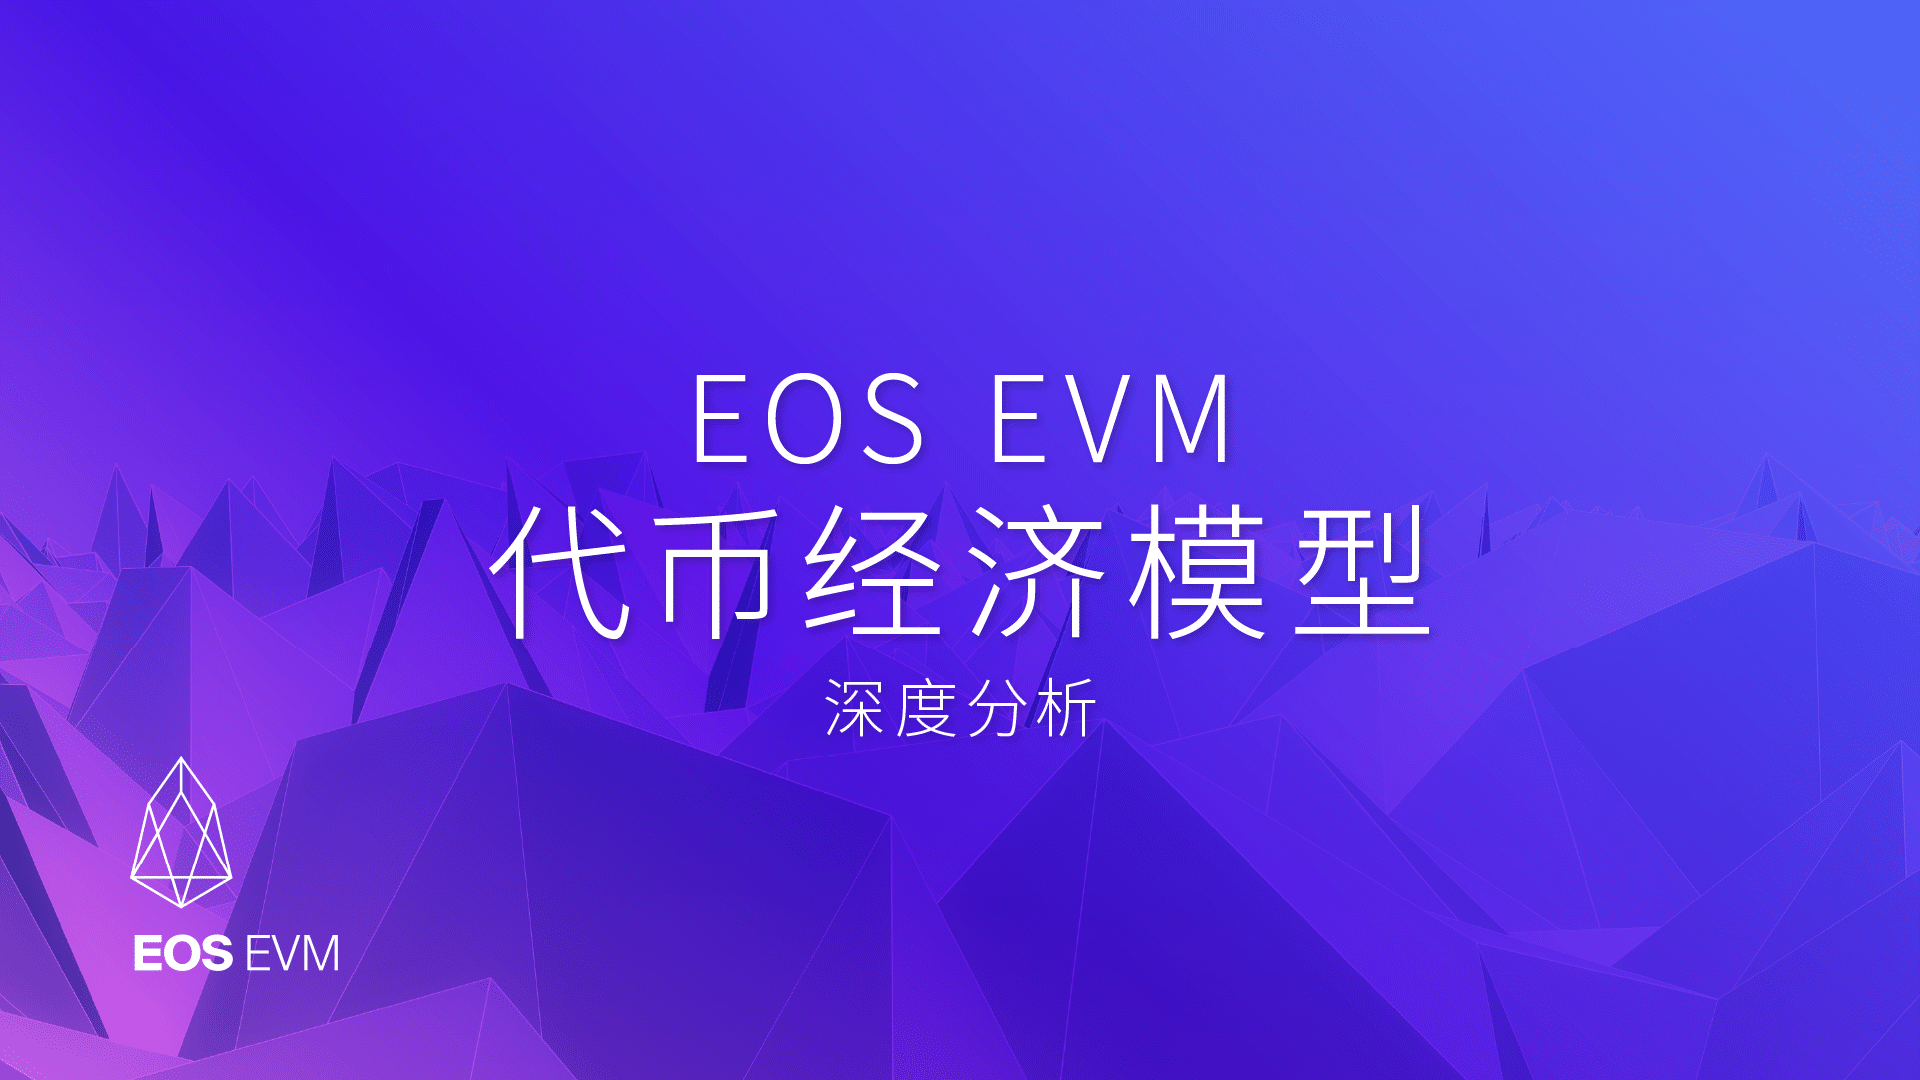 EOS EVM 代币经济模型深度分析